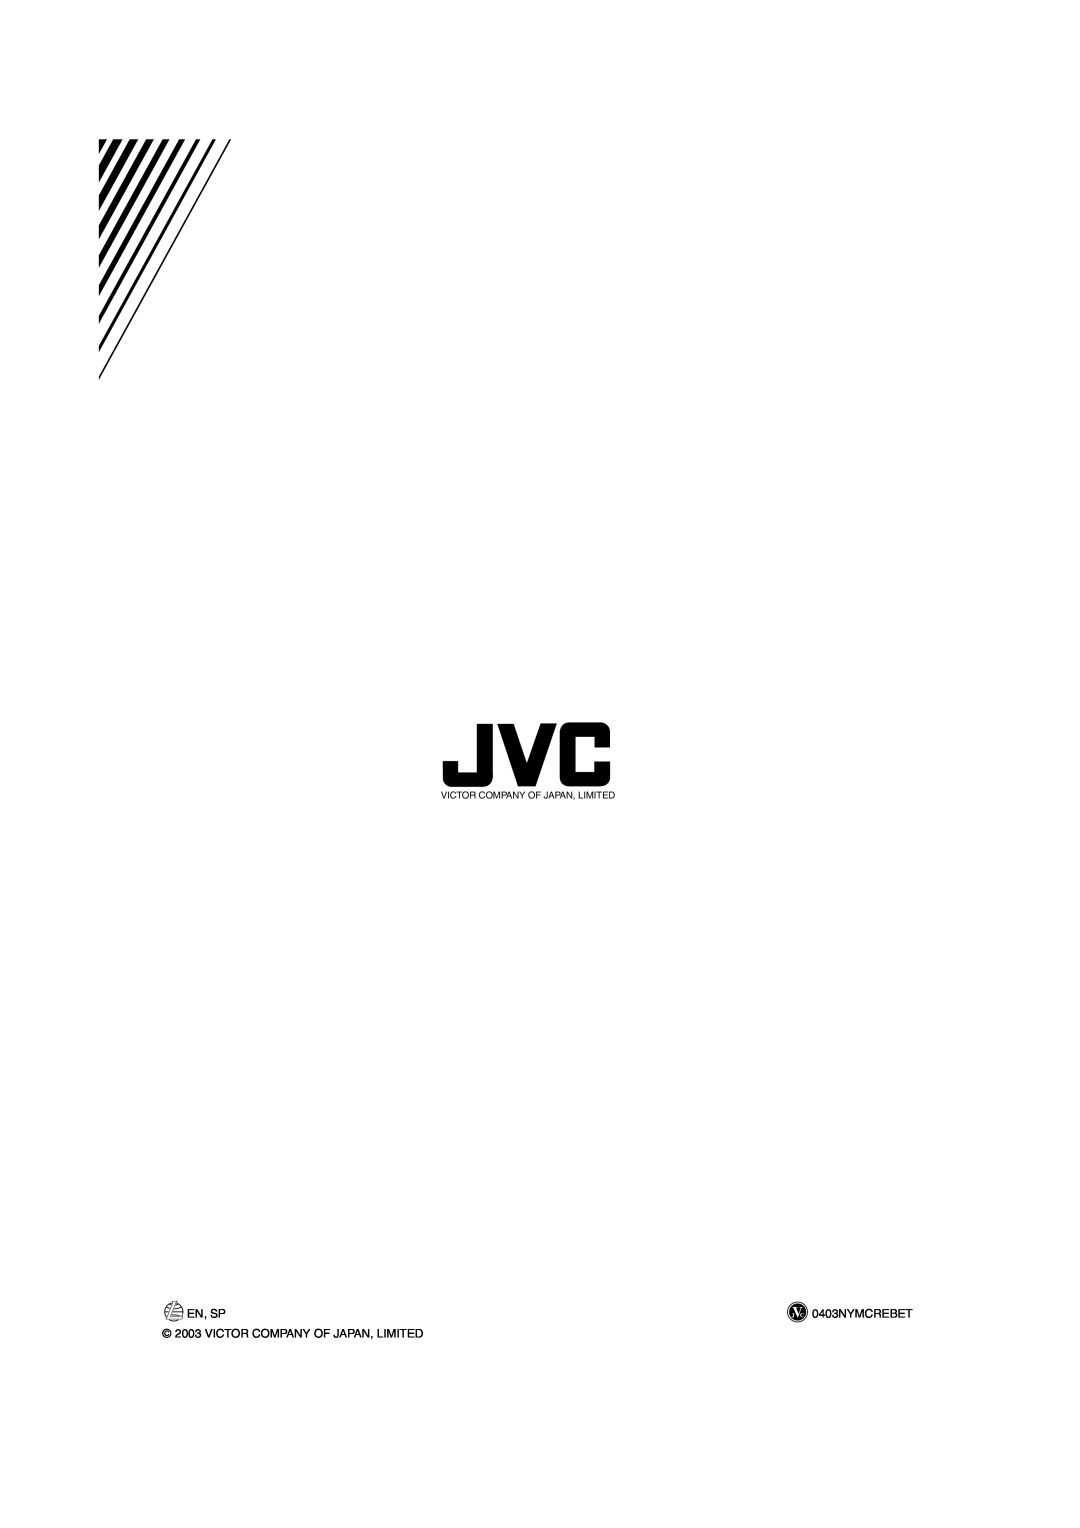 JVC MX-KA7 manual En, Sp, 0403NYMCREBET, Victor Company Of Japan, Limited 